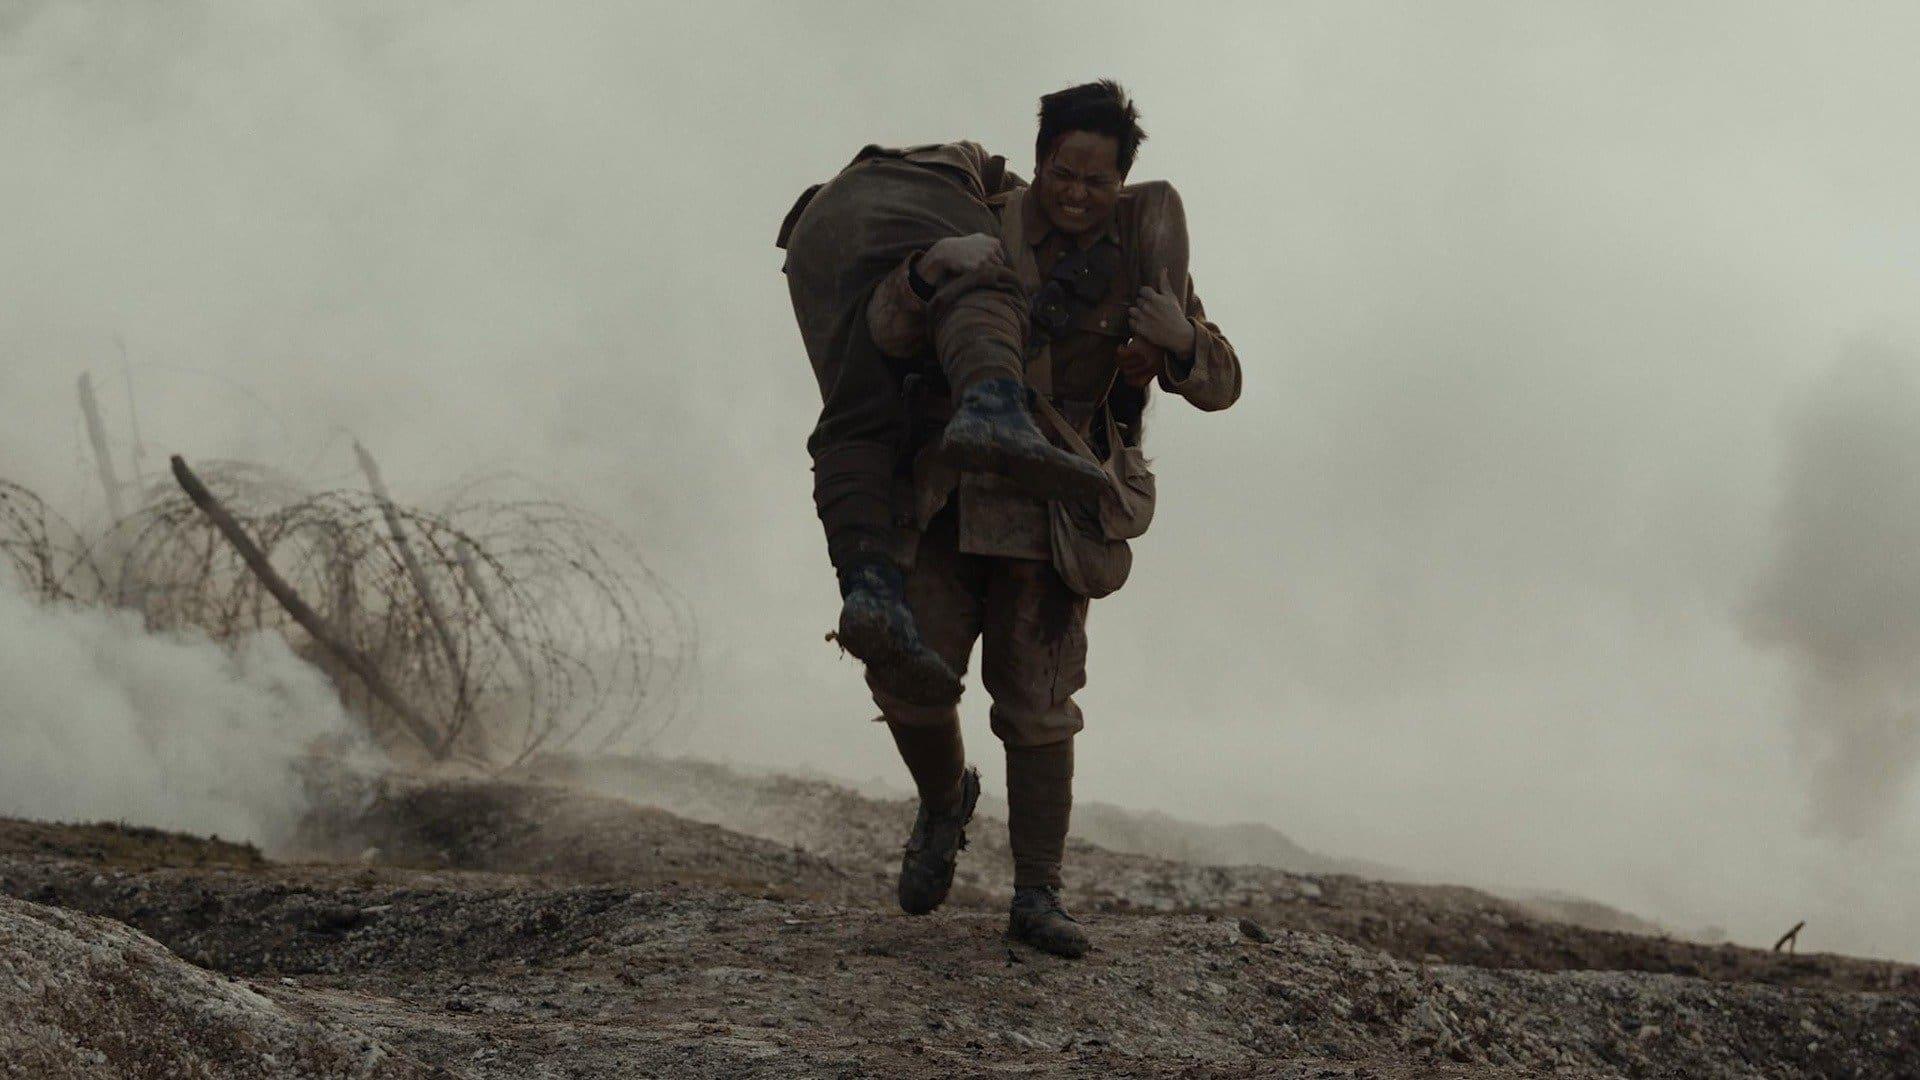 Gurkha: Beneath the Bravery backdrop